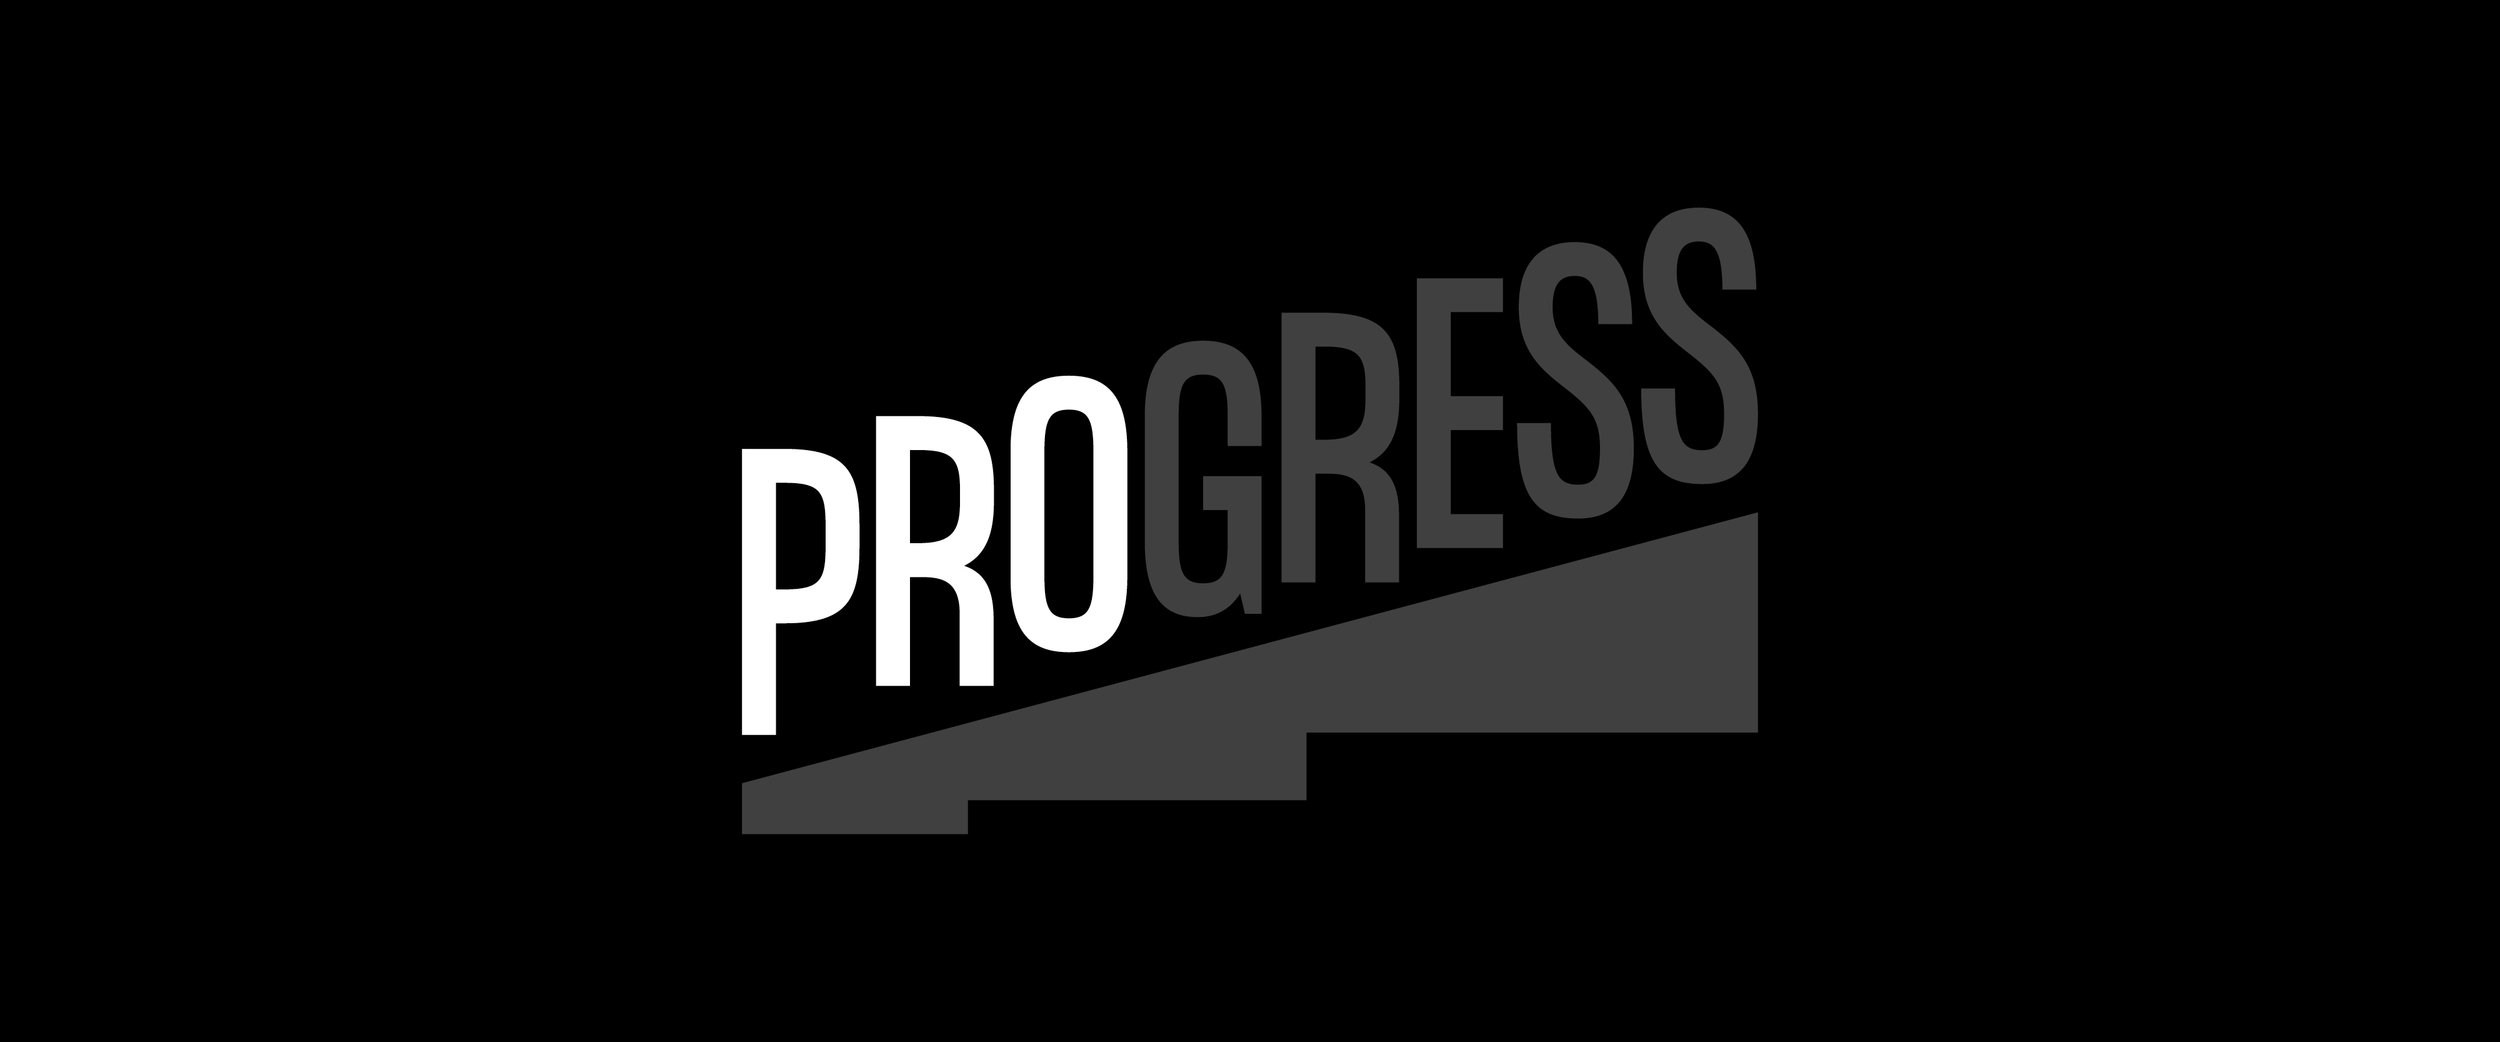 ucm-progress-logo4.jpg